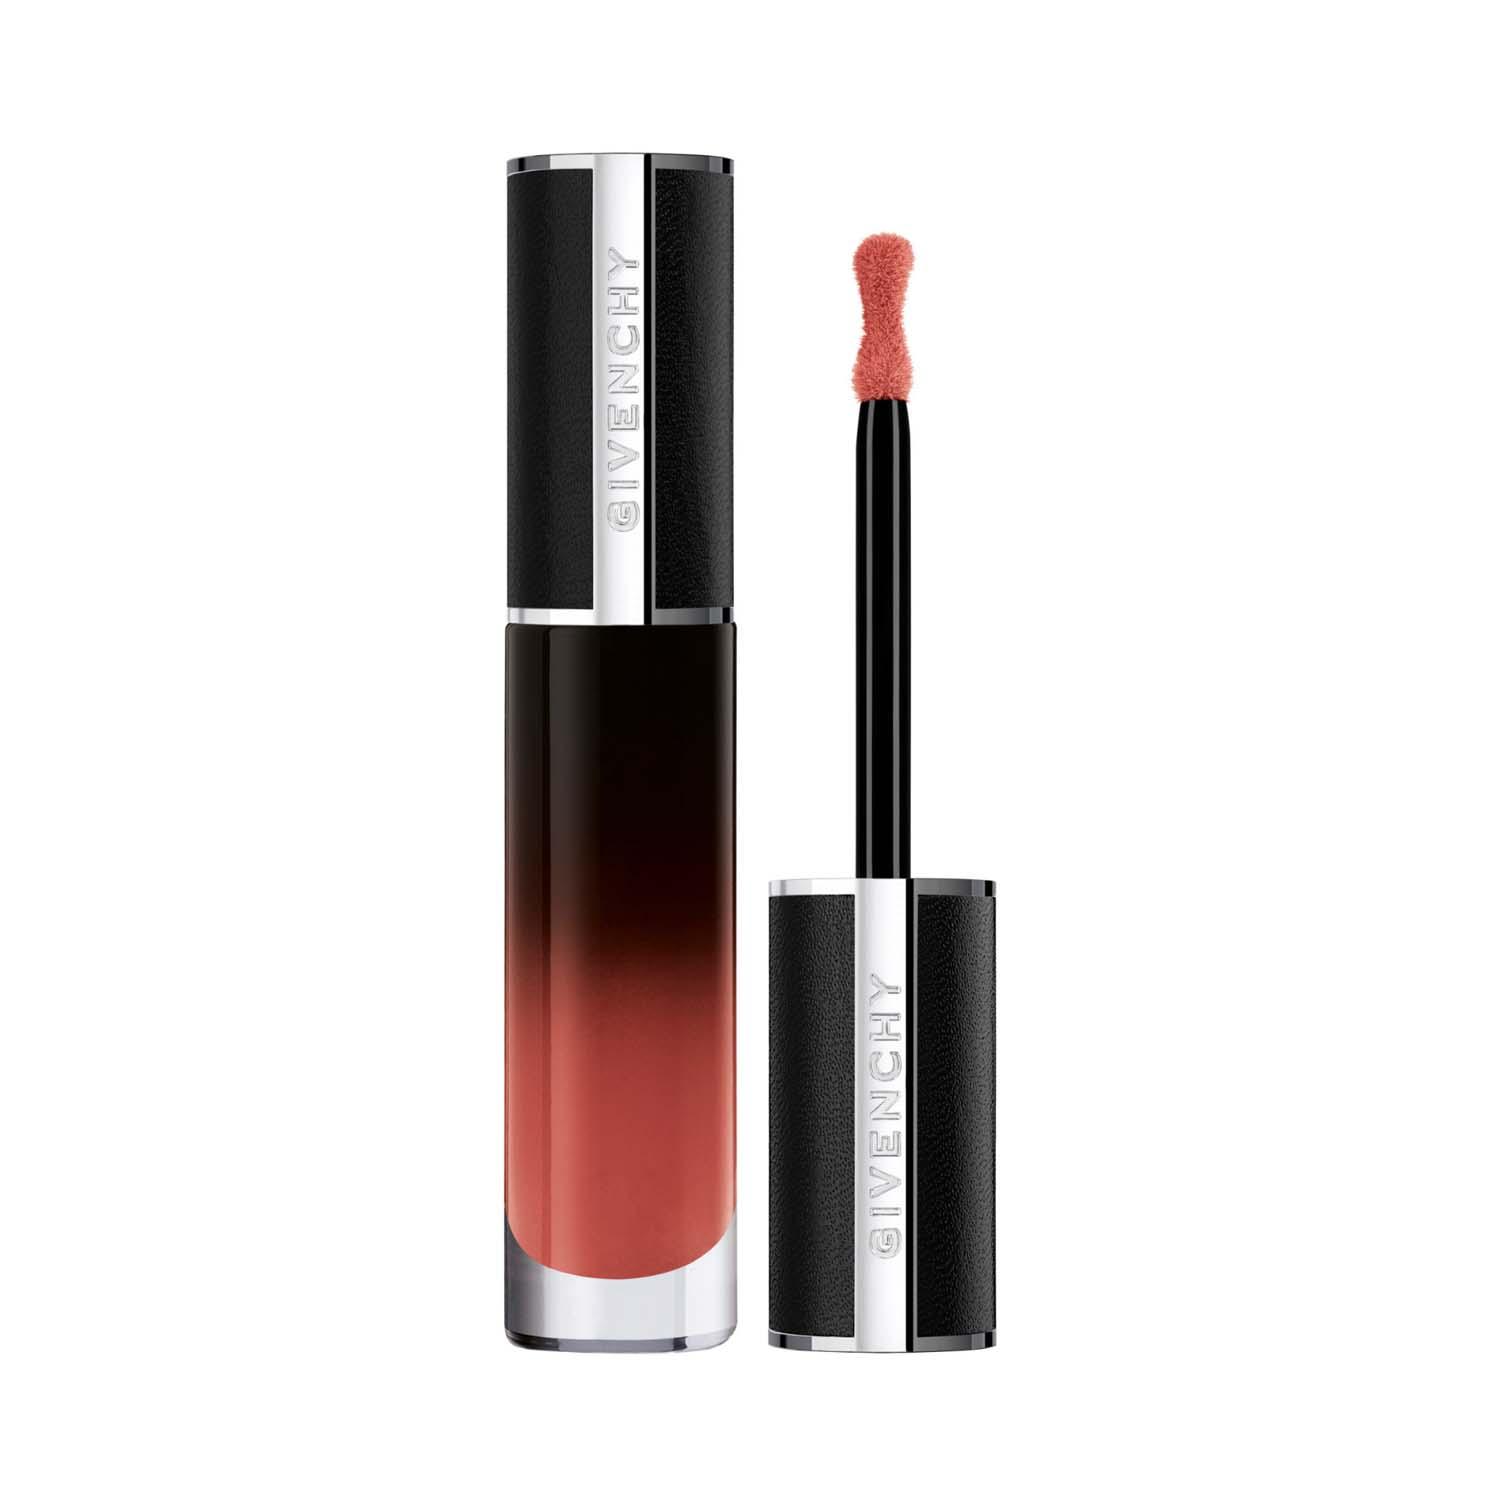 Givenchy | Givenchy Le Rouge Interdit Cream Velvet Liquid Lipstick - N15 Nude Ambre (6.5 ml)